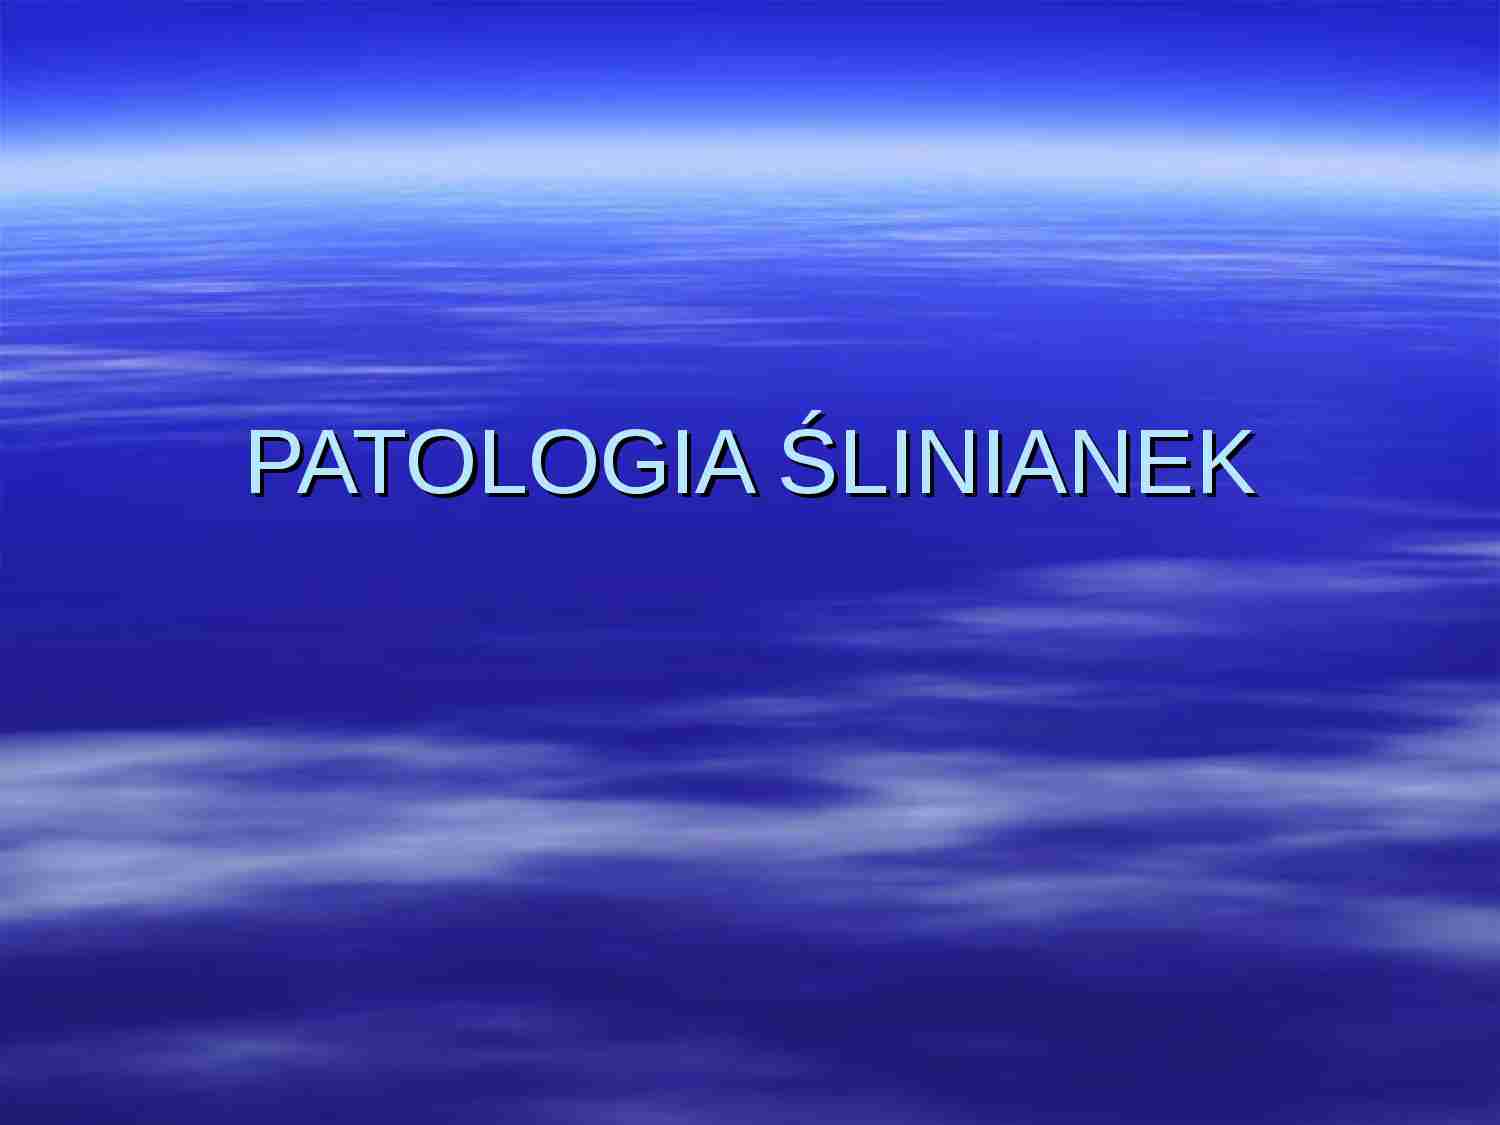 Patomorfoloiga - patologia ślinianek - strona 1